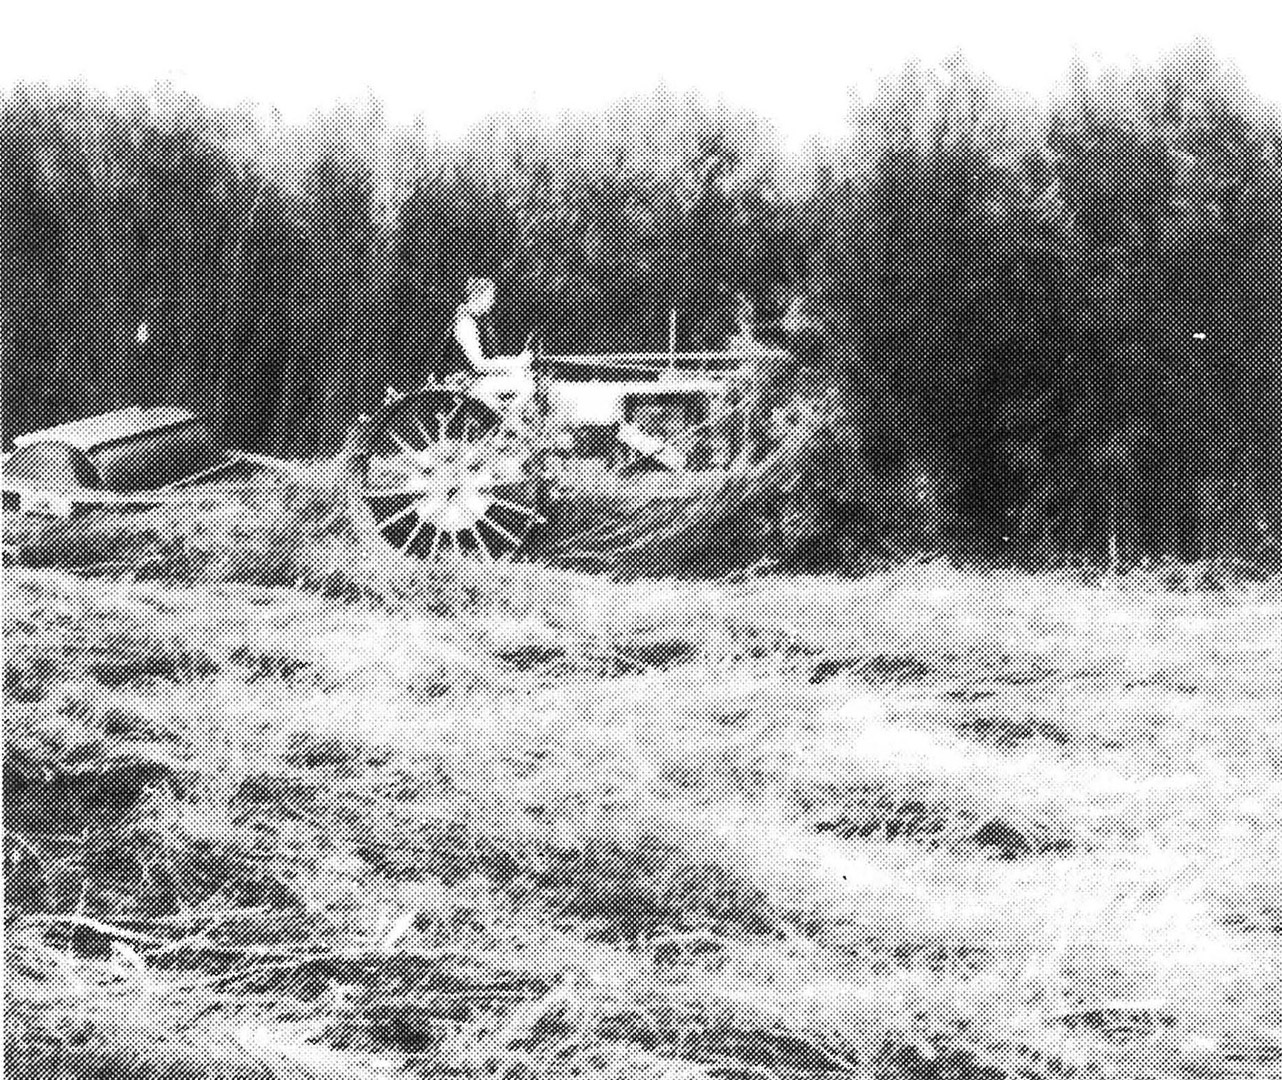 Crushing ti-tree on the Eureka Swamp in the late 1950s.